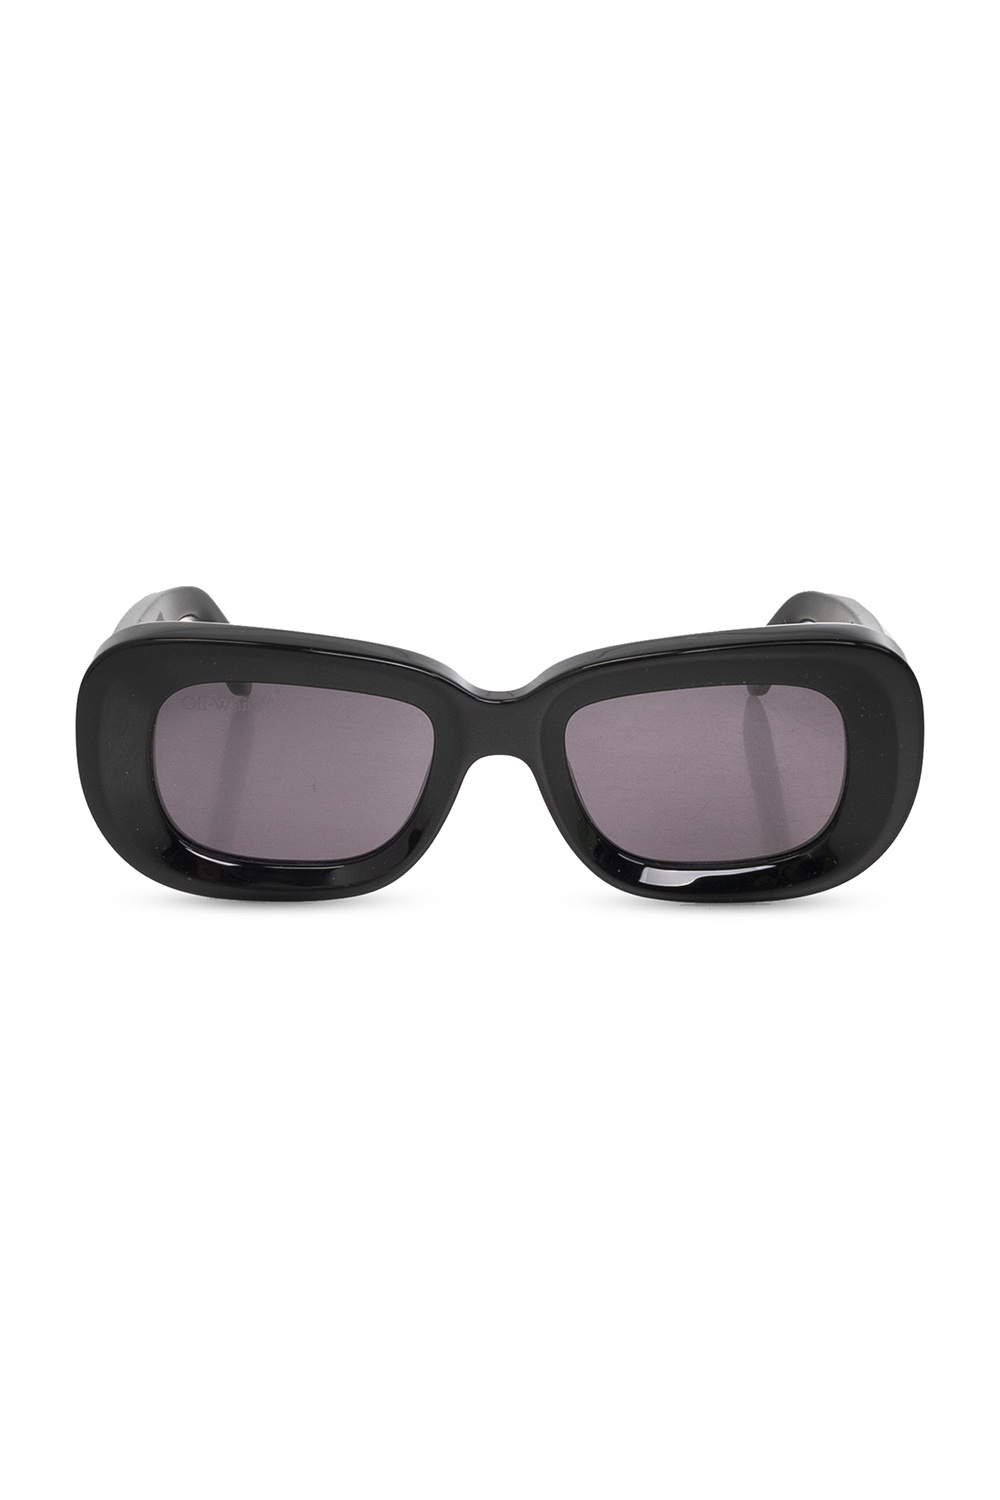 Off-White Carrara Black Sunglasses